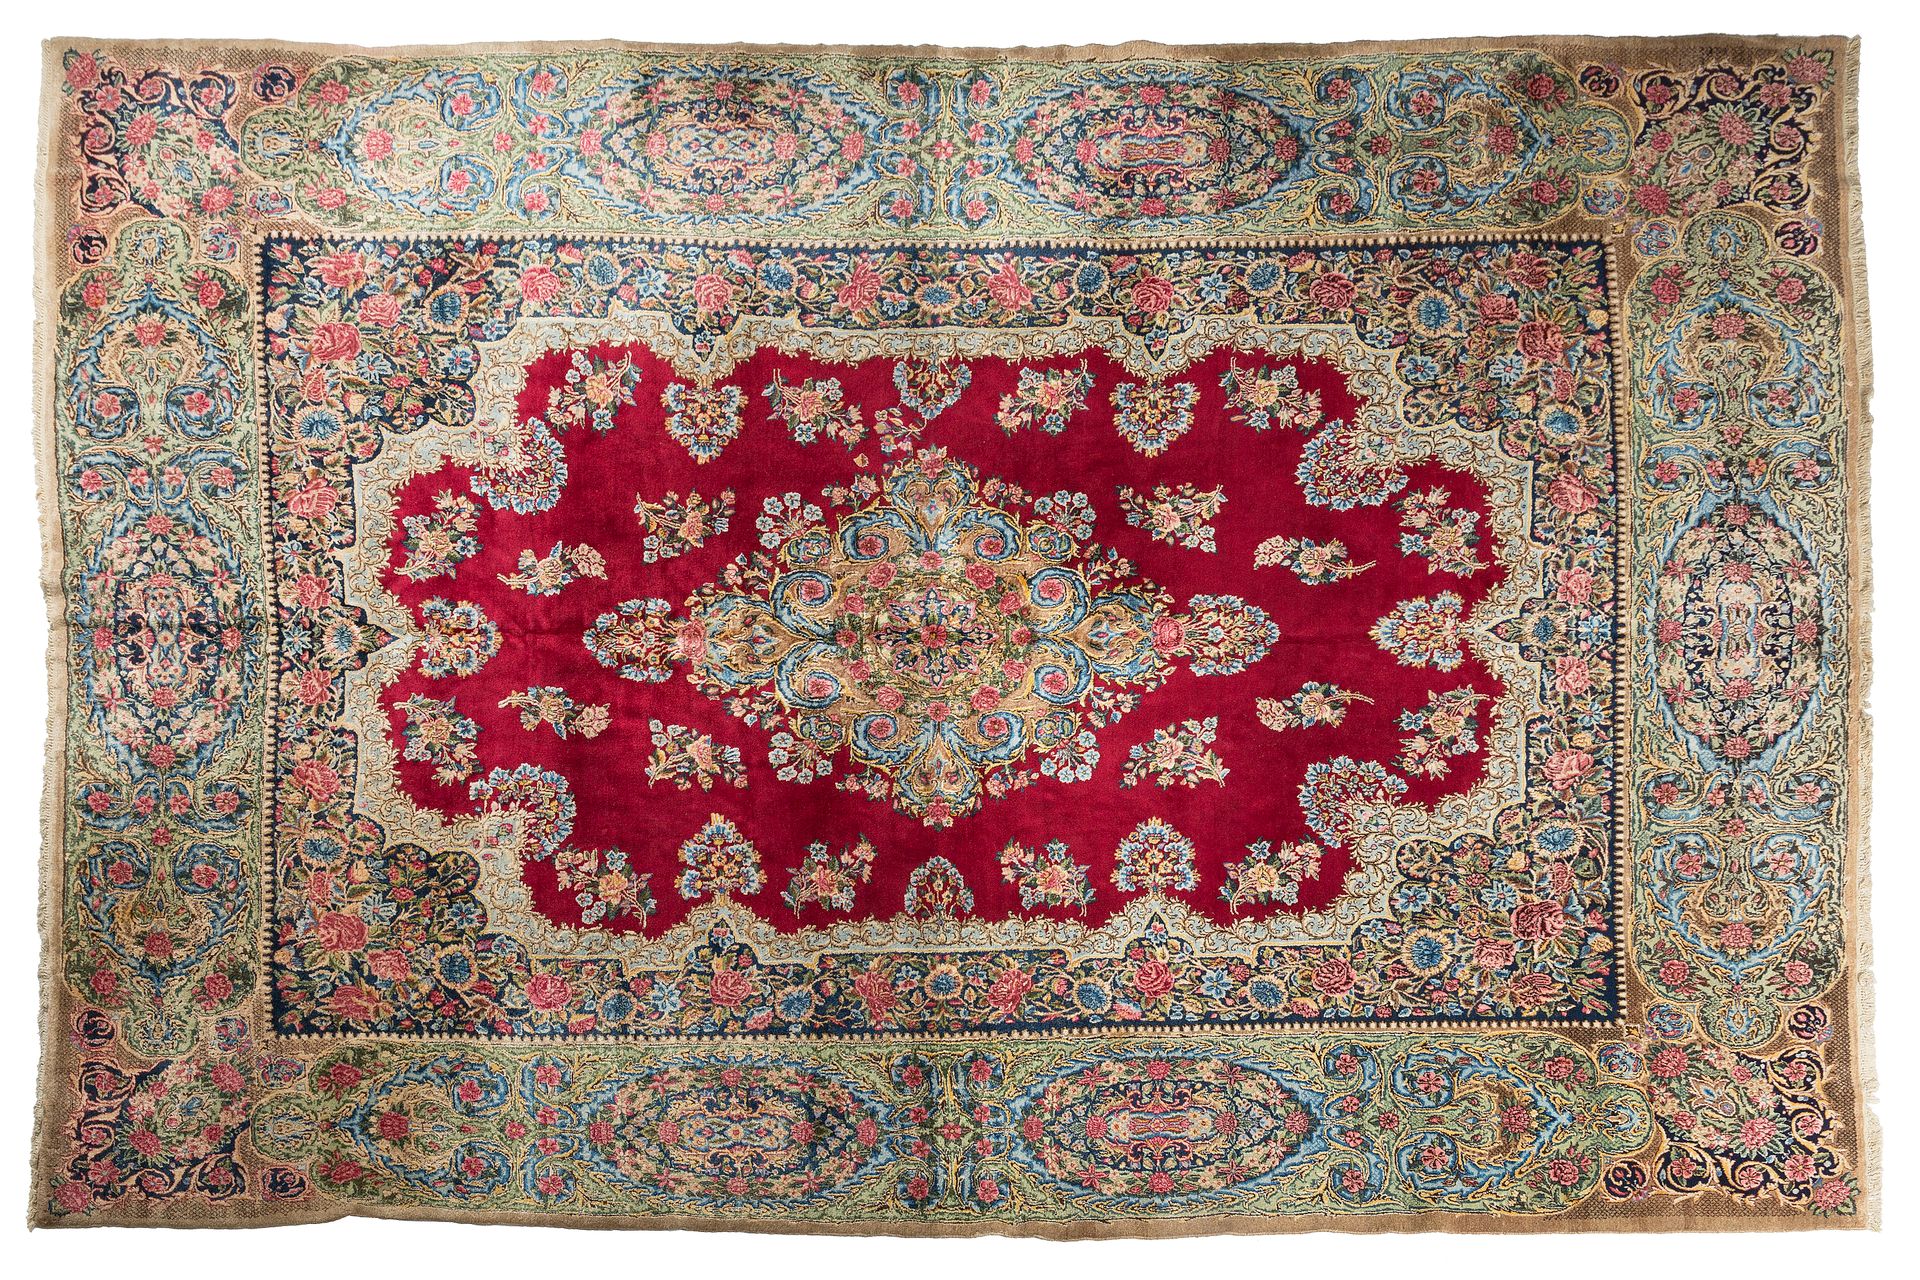 Null 基尔曼地毯（伊朗），20世纪后半叶

尺寸：400 x 290厘米。

技术特点 : 羊毛丝绒，棉质基础。

一个崇高的菱形奖章，多叶和植被，旧金，有&hellip;